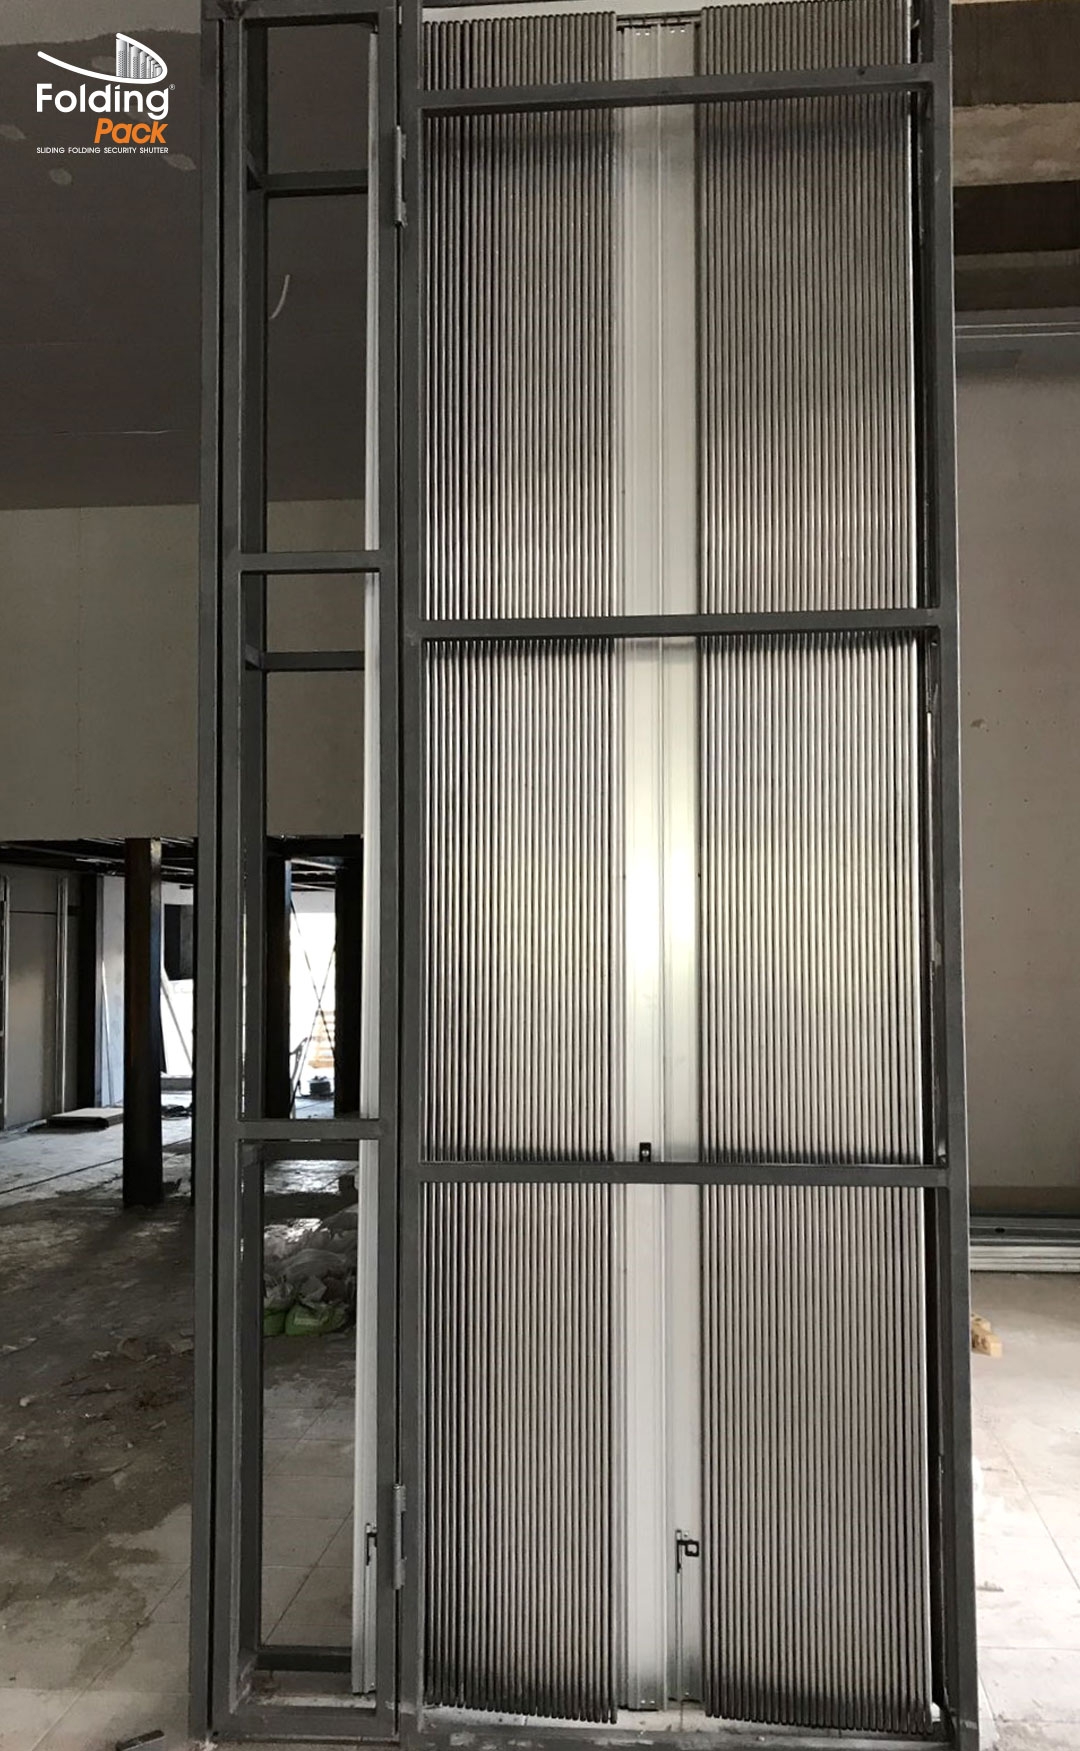 Industrial folding shutter doors